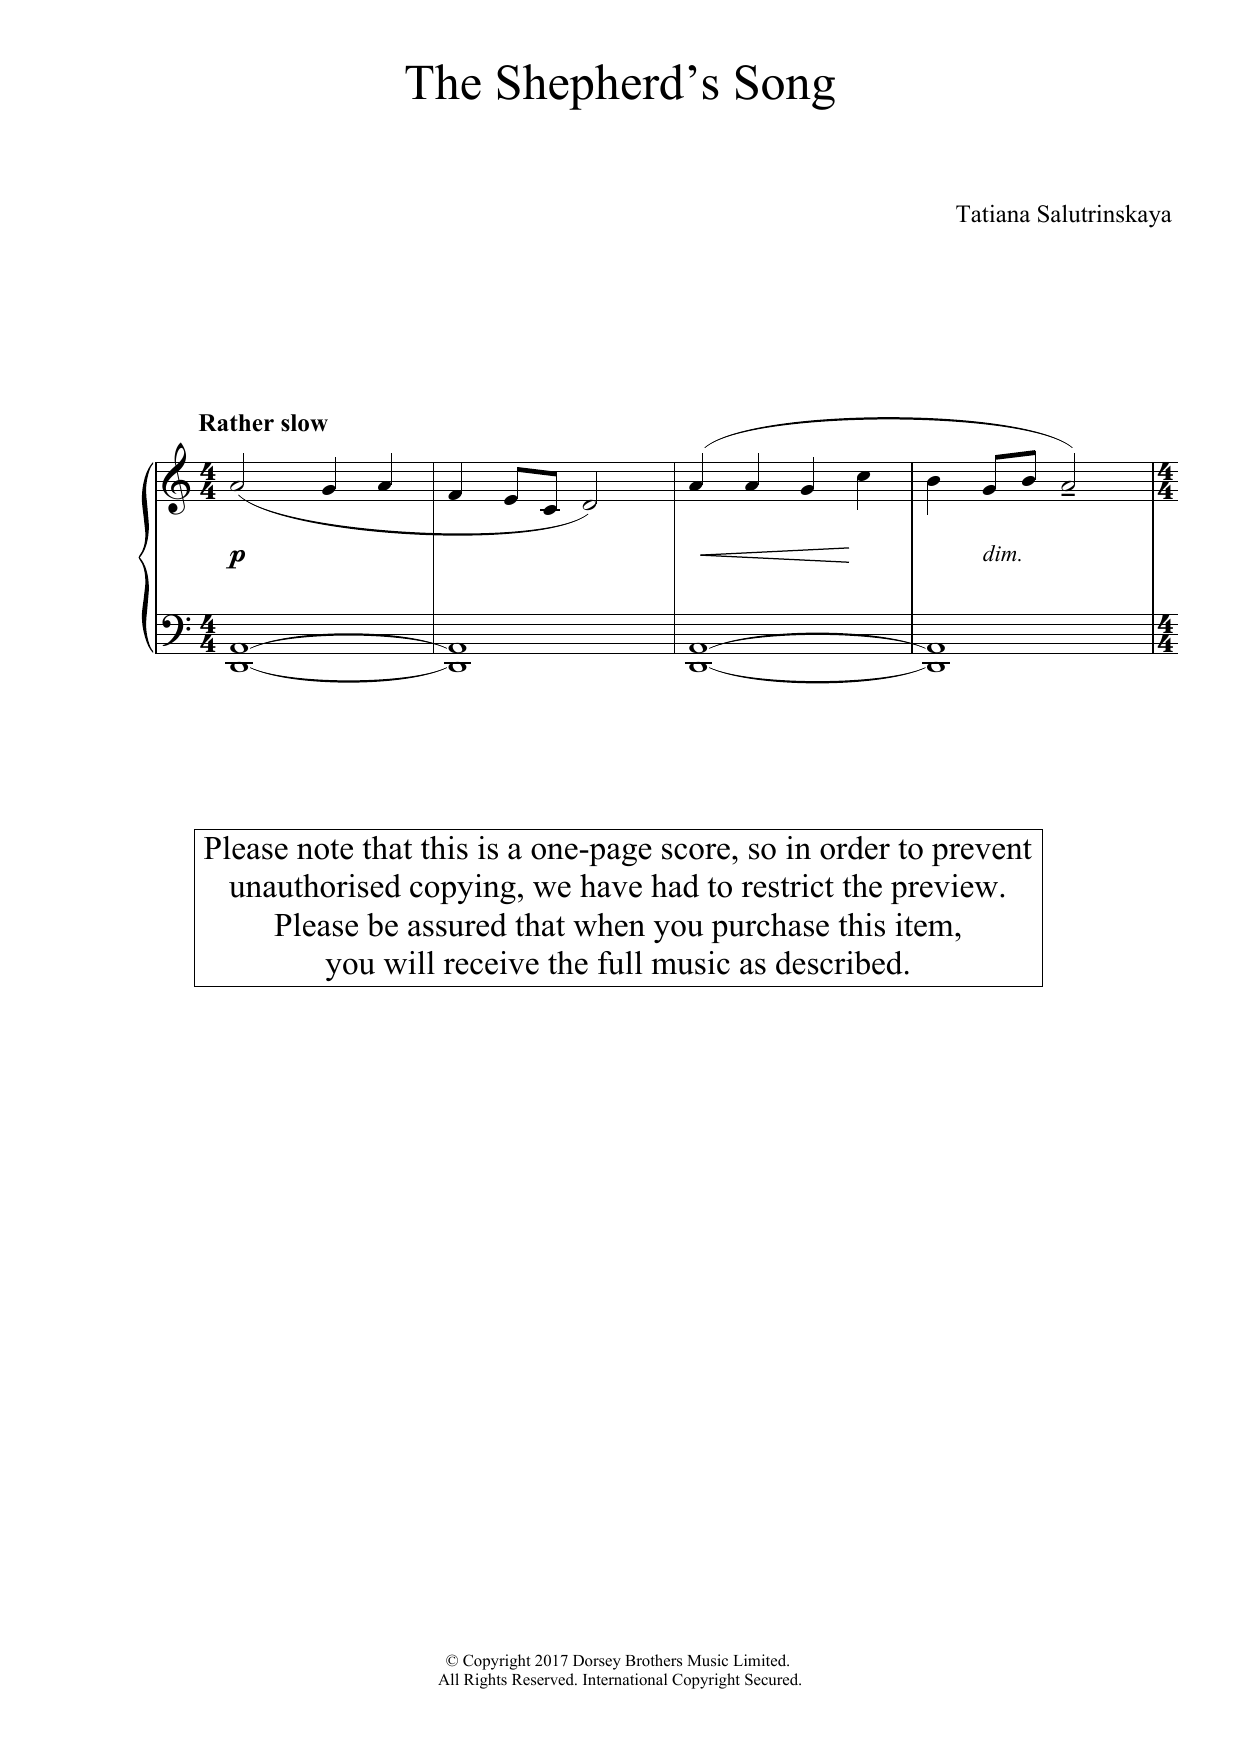 Tatiana Salutrinskaya The Shepherd's Song Sheet Music Notes & Chords for Easy Piano - Download or Print PDF